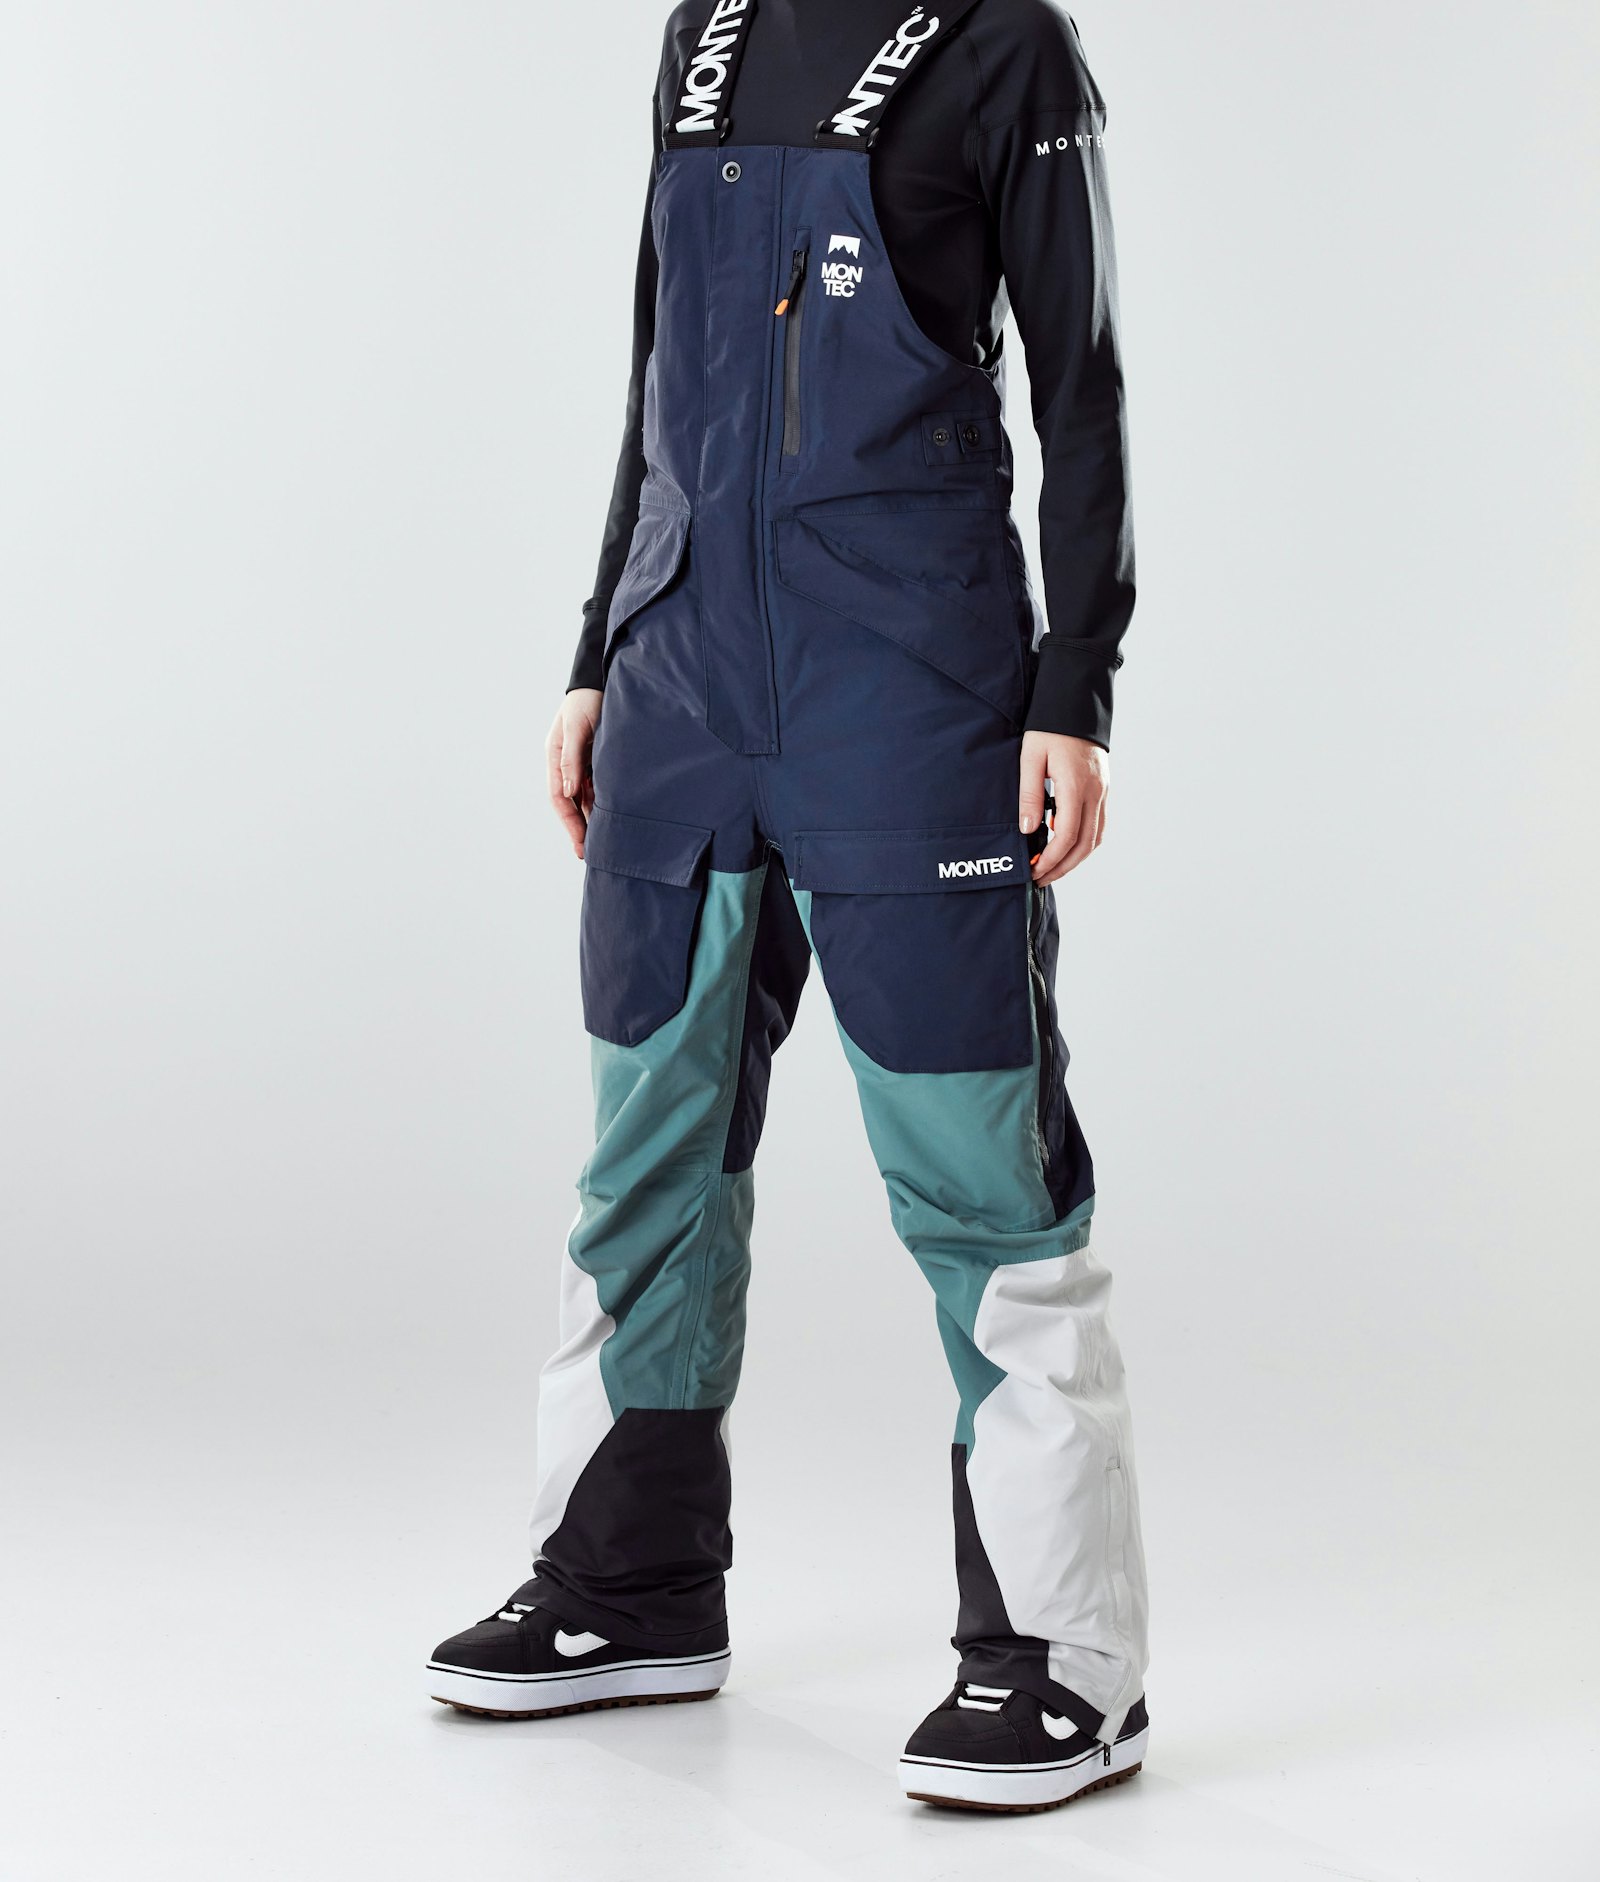 Montec Fawk W 2020 Pantalon de Snowboard Femme Marine/Atlantic/Light Grey